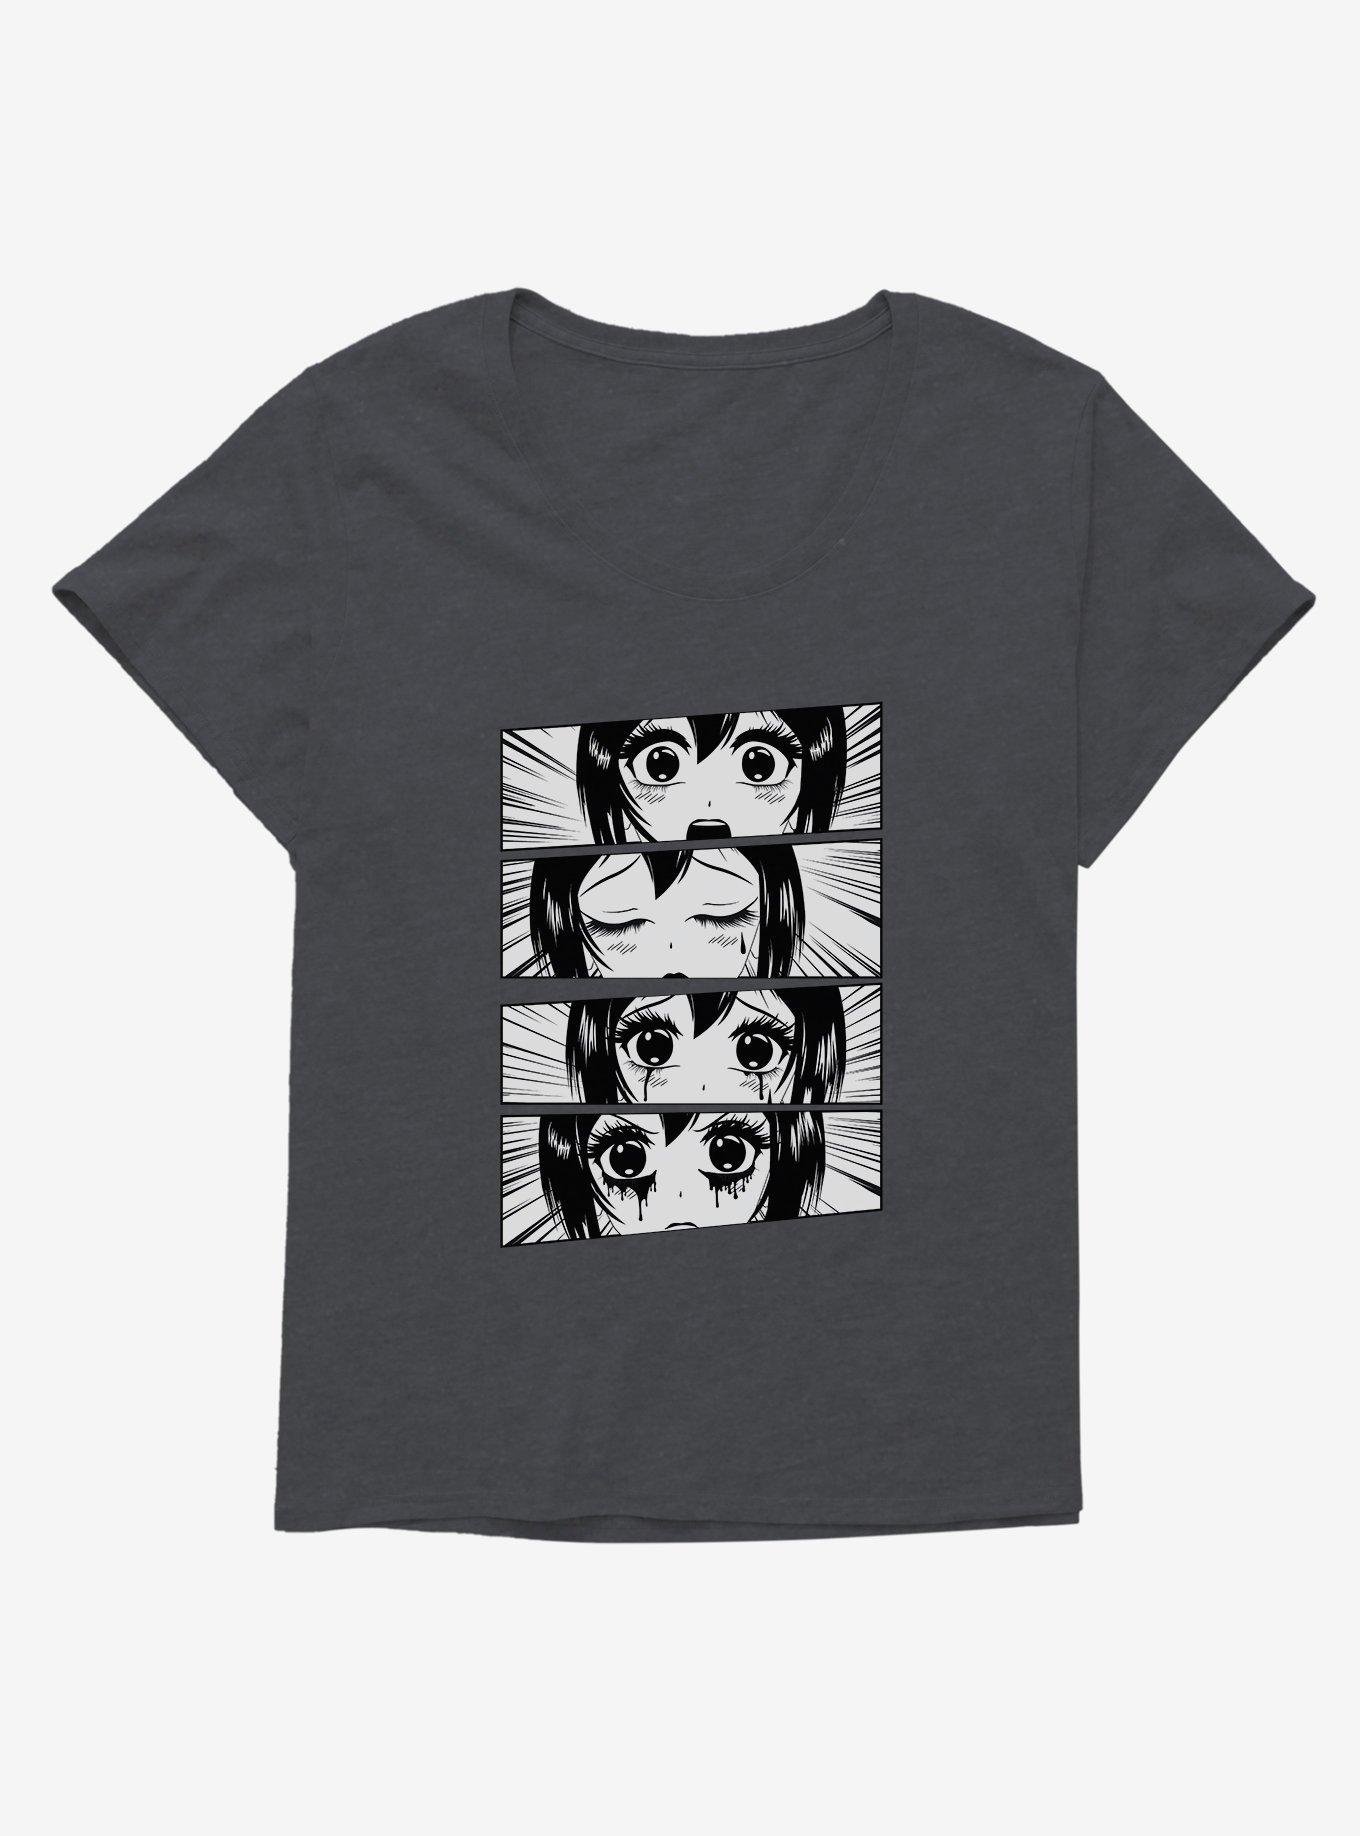 Destroyed Anime Eyes Art Girls T-Shirt Plus